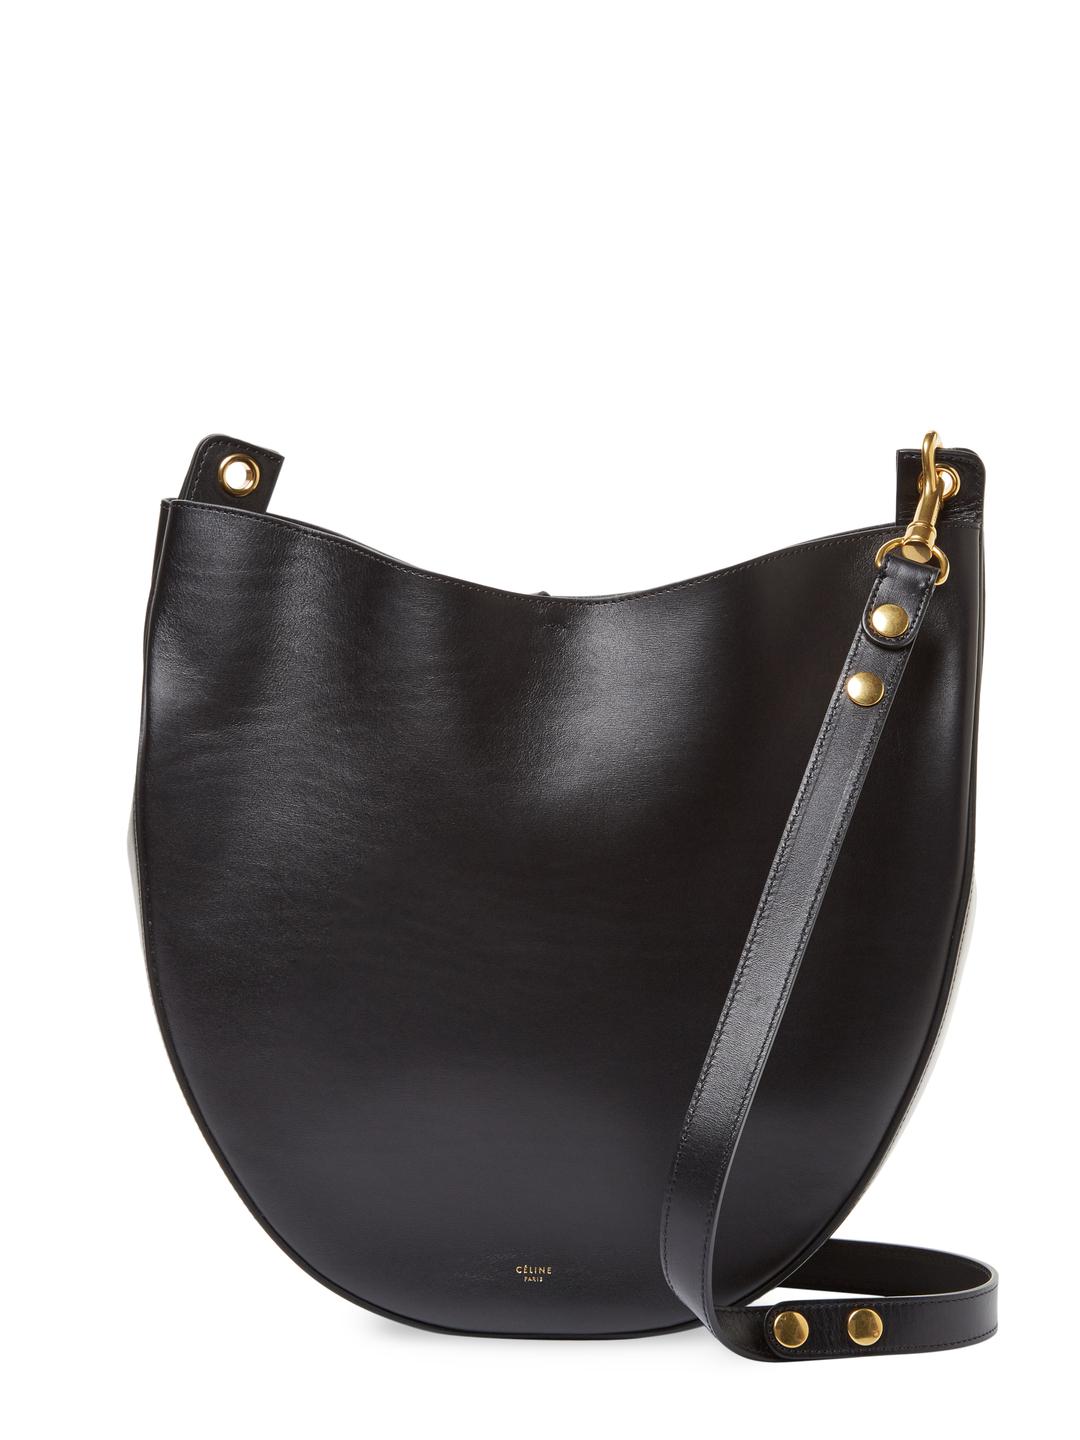 Celine Medium Calfskin Leather Hobo Bag in Black | Lyst Canada